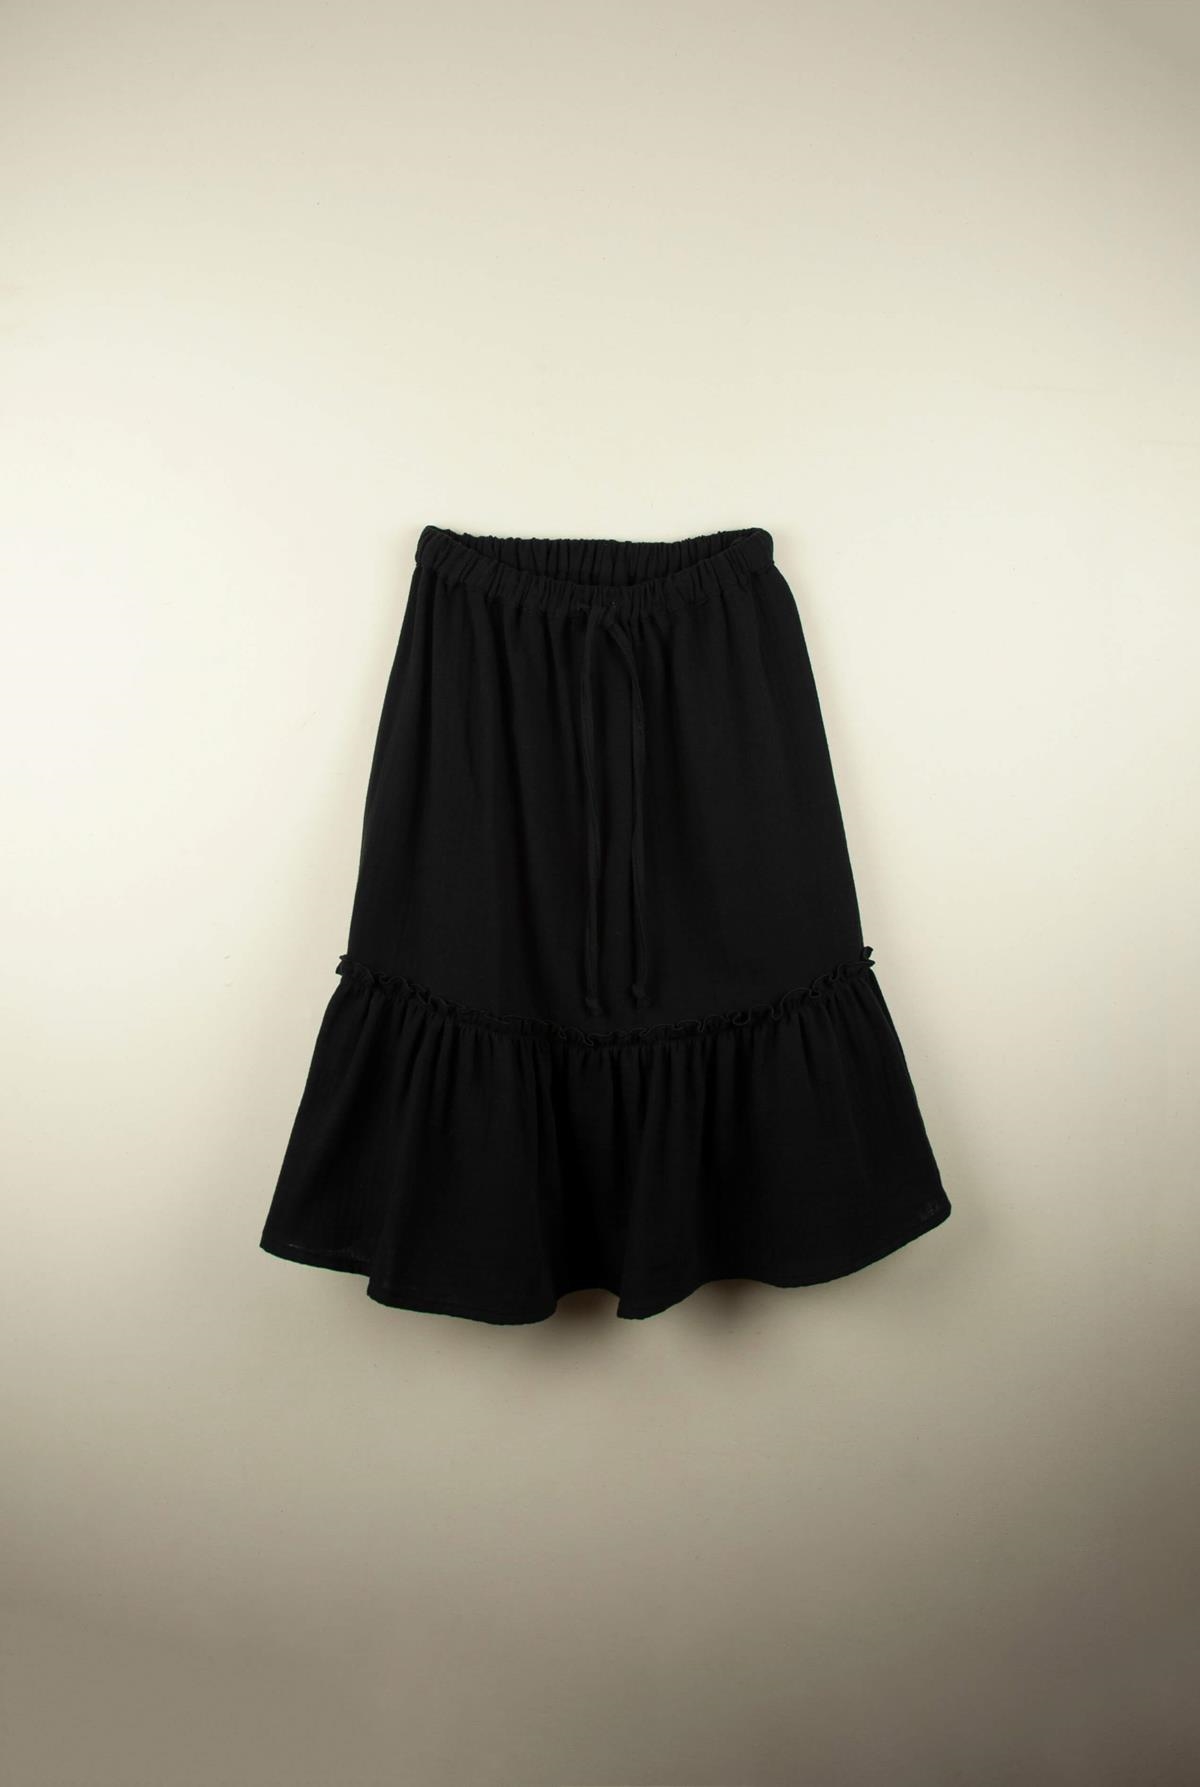 Mod.19.4 Black midi-length skirt with frill | AW21.22 Mod.19.4 Black midi-length skirt with frill | 1